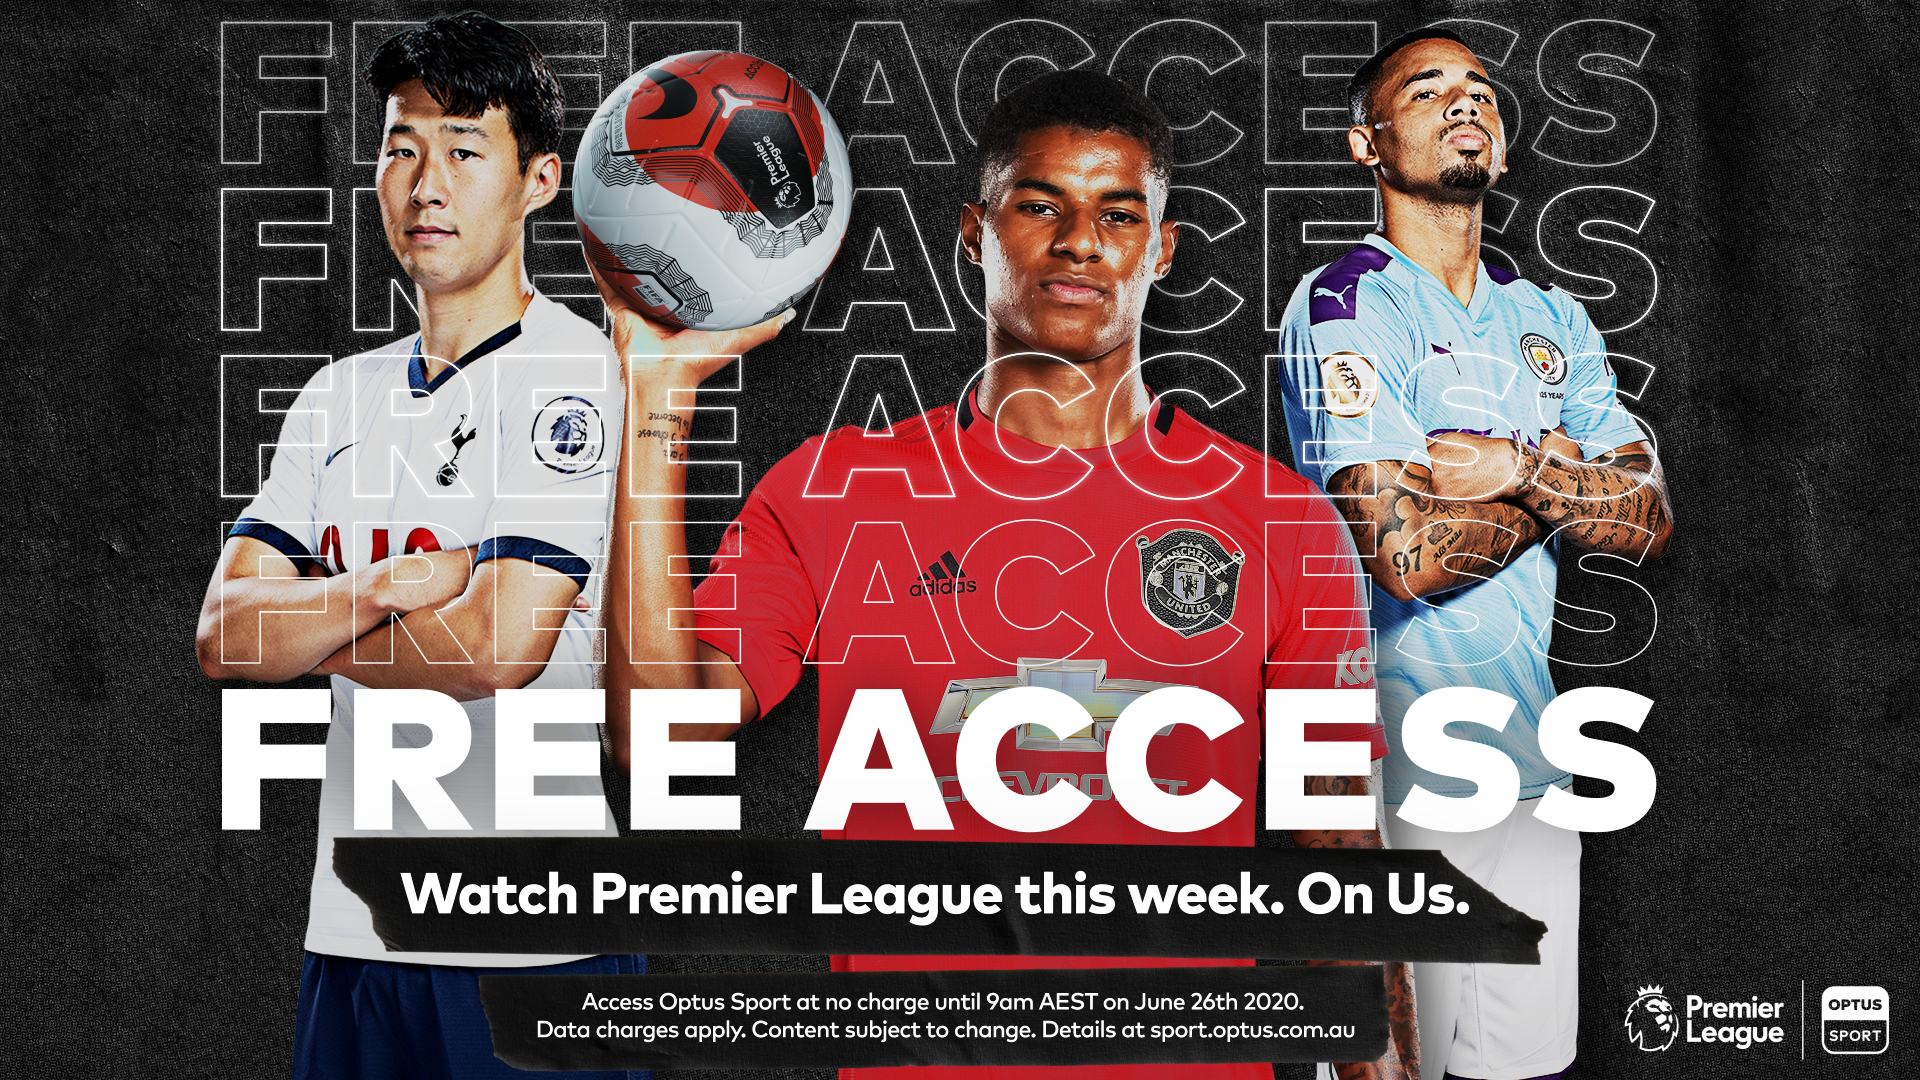 Watch Premier League with free access until 9am AEST June 26